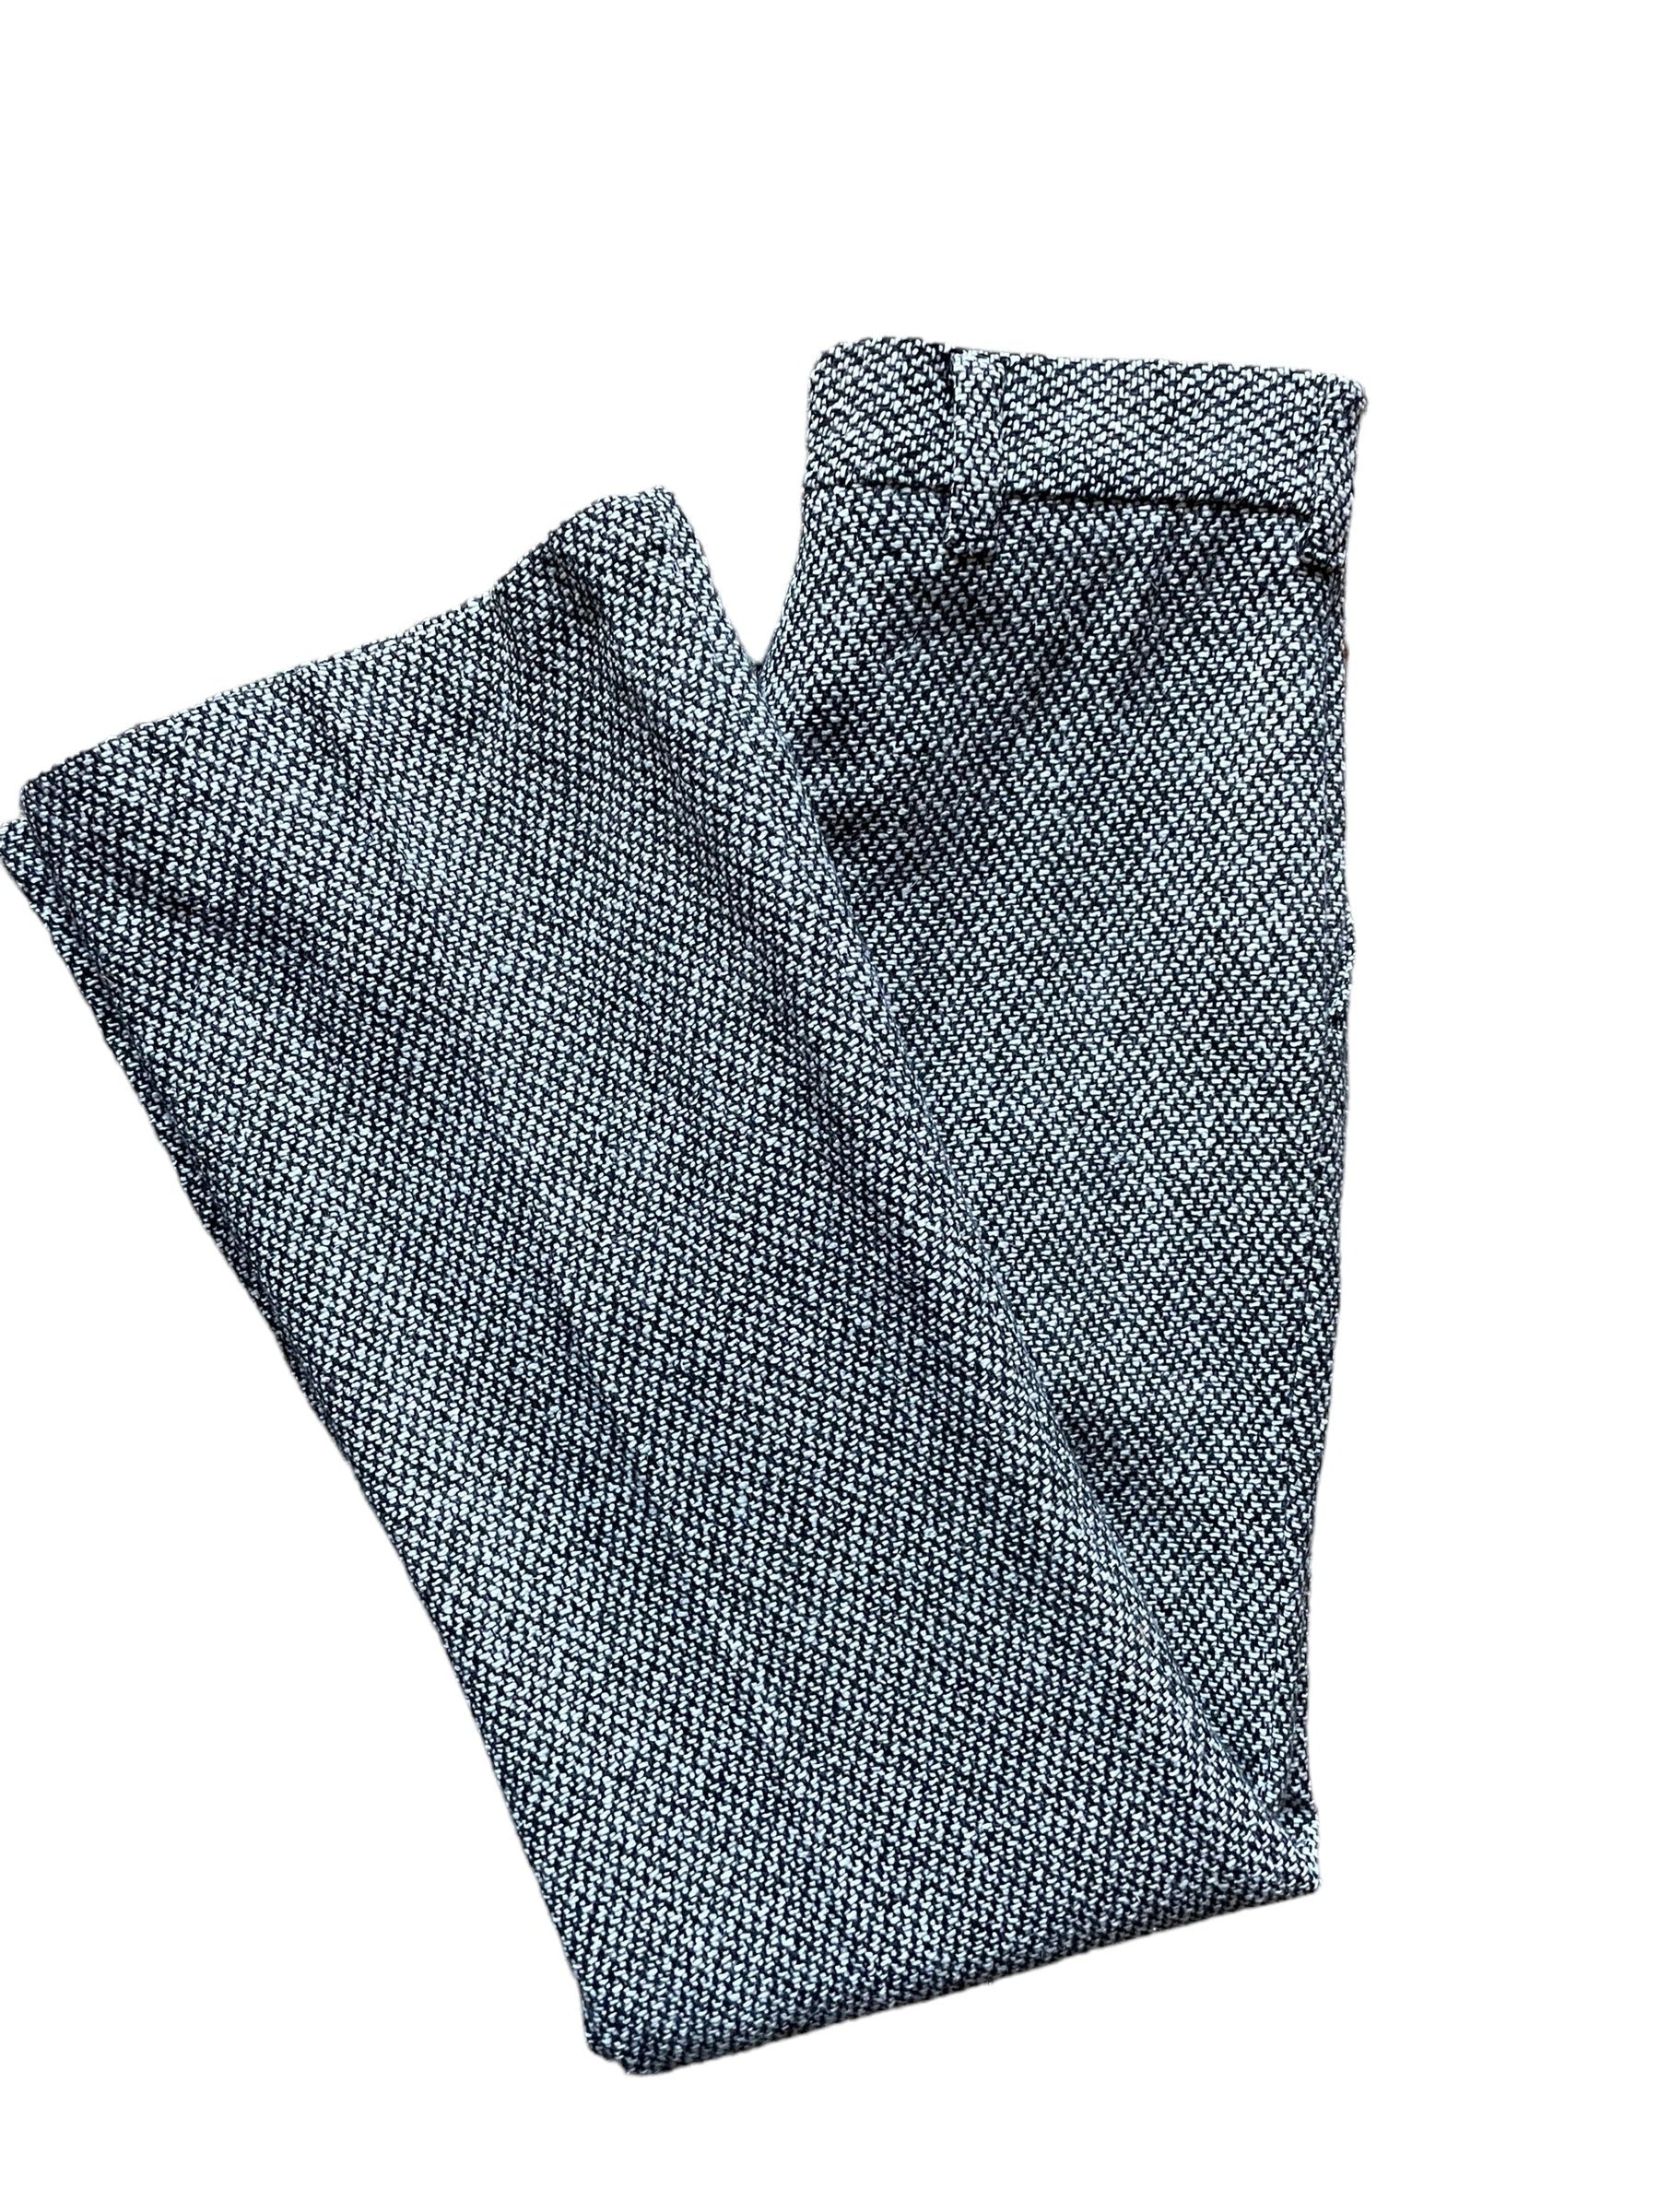 Folded pant view of Vintage 1970s Deadstock Wool Blend Tweed Trousers W30 | Barn Owl Vintage Seattle | Vintage Trousers